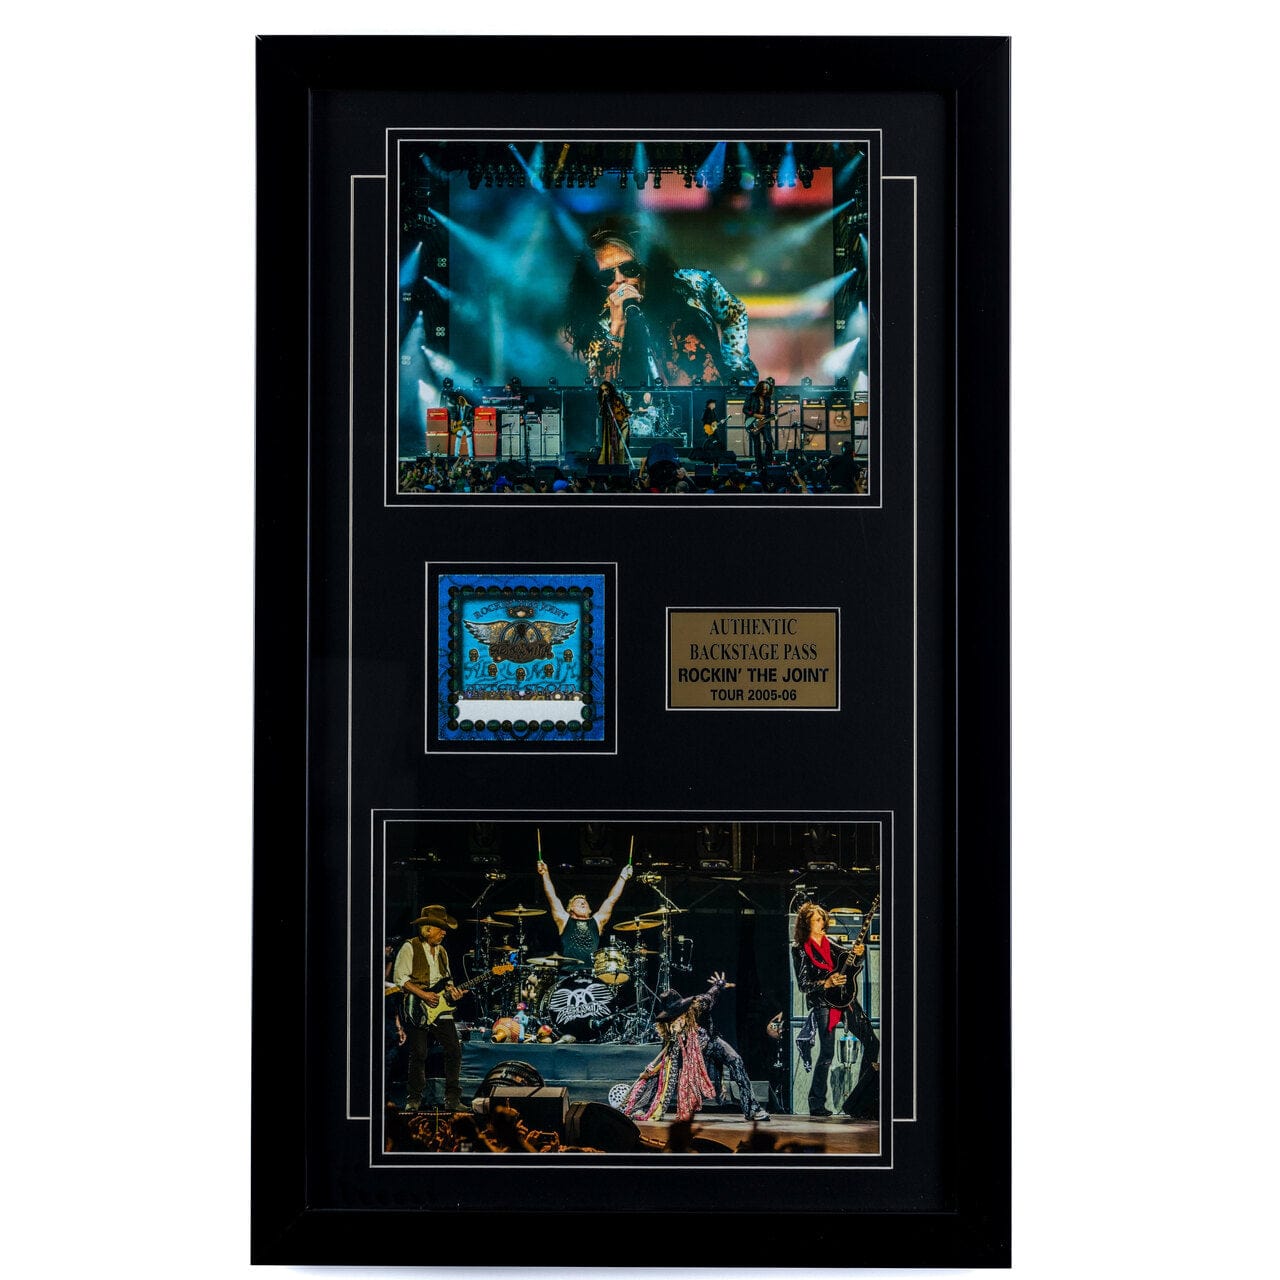 Aerosmith Memorabilia - Backstage Pass frame